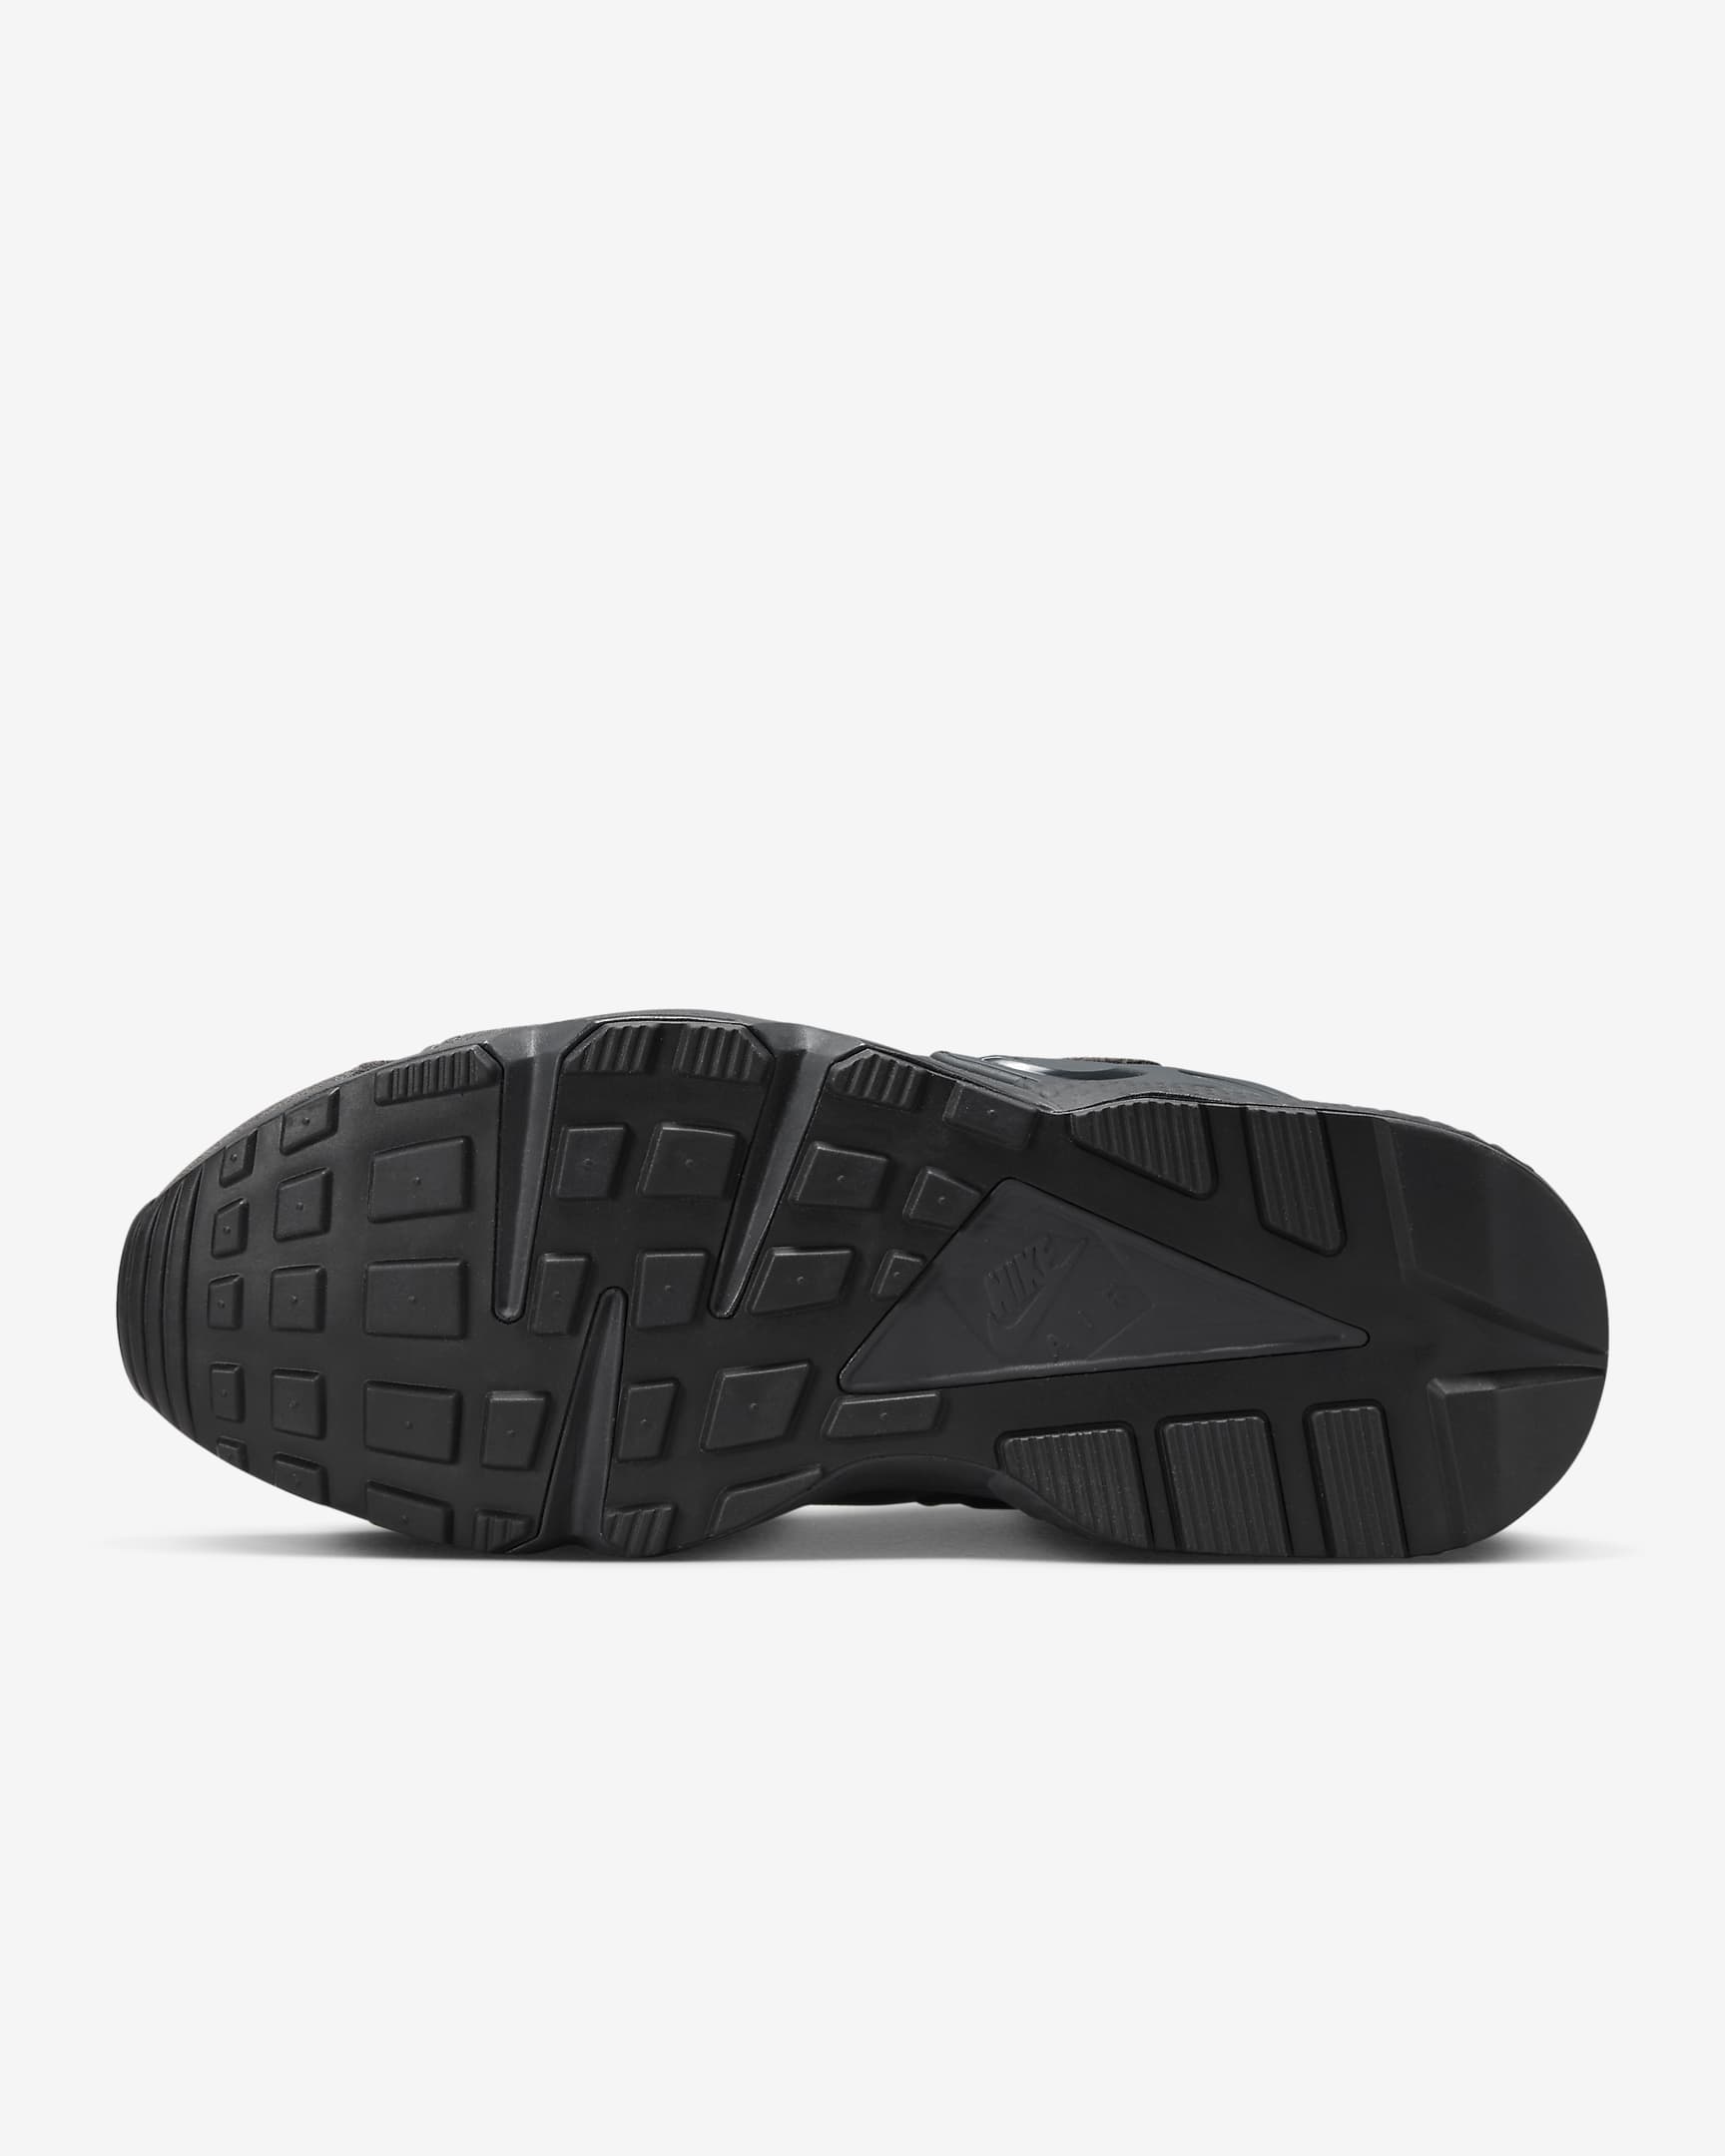 Nike Air Huarache Runner Men's Shoes - Black/Anthracite/Medium Ash